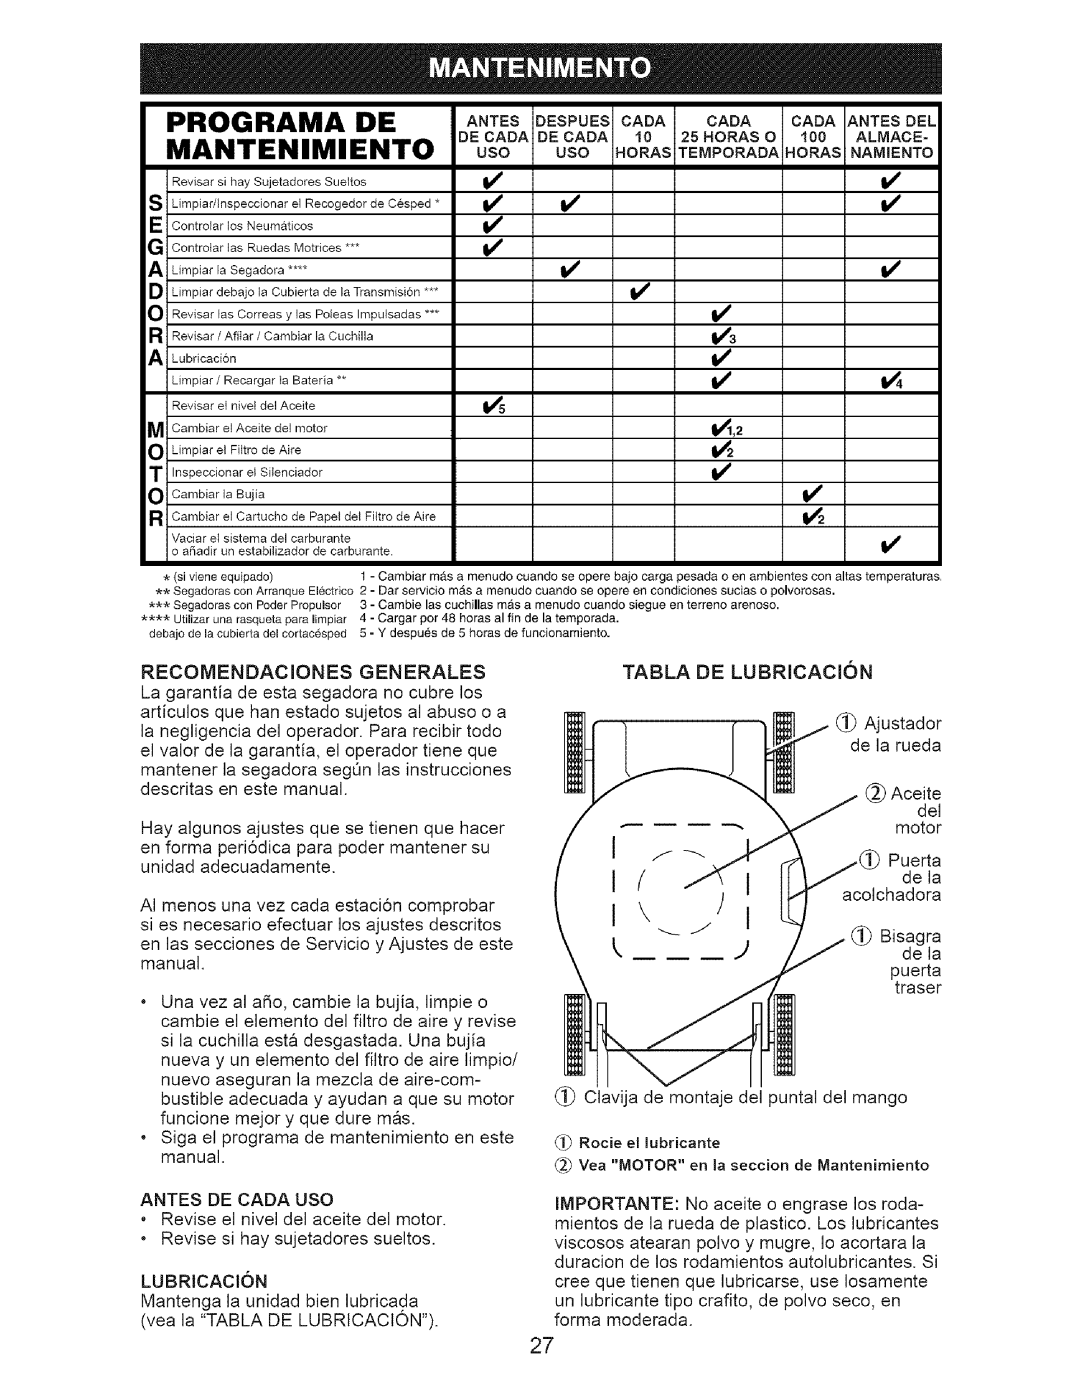 Craftsman 917.3882 owner manual Programa De, Mantenimiento, DECADAOECAOAI0 2 HORASO 100 ALMACE 